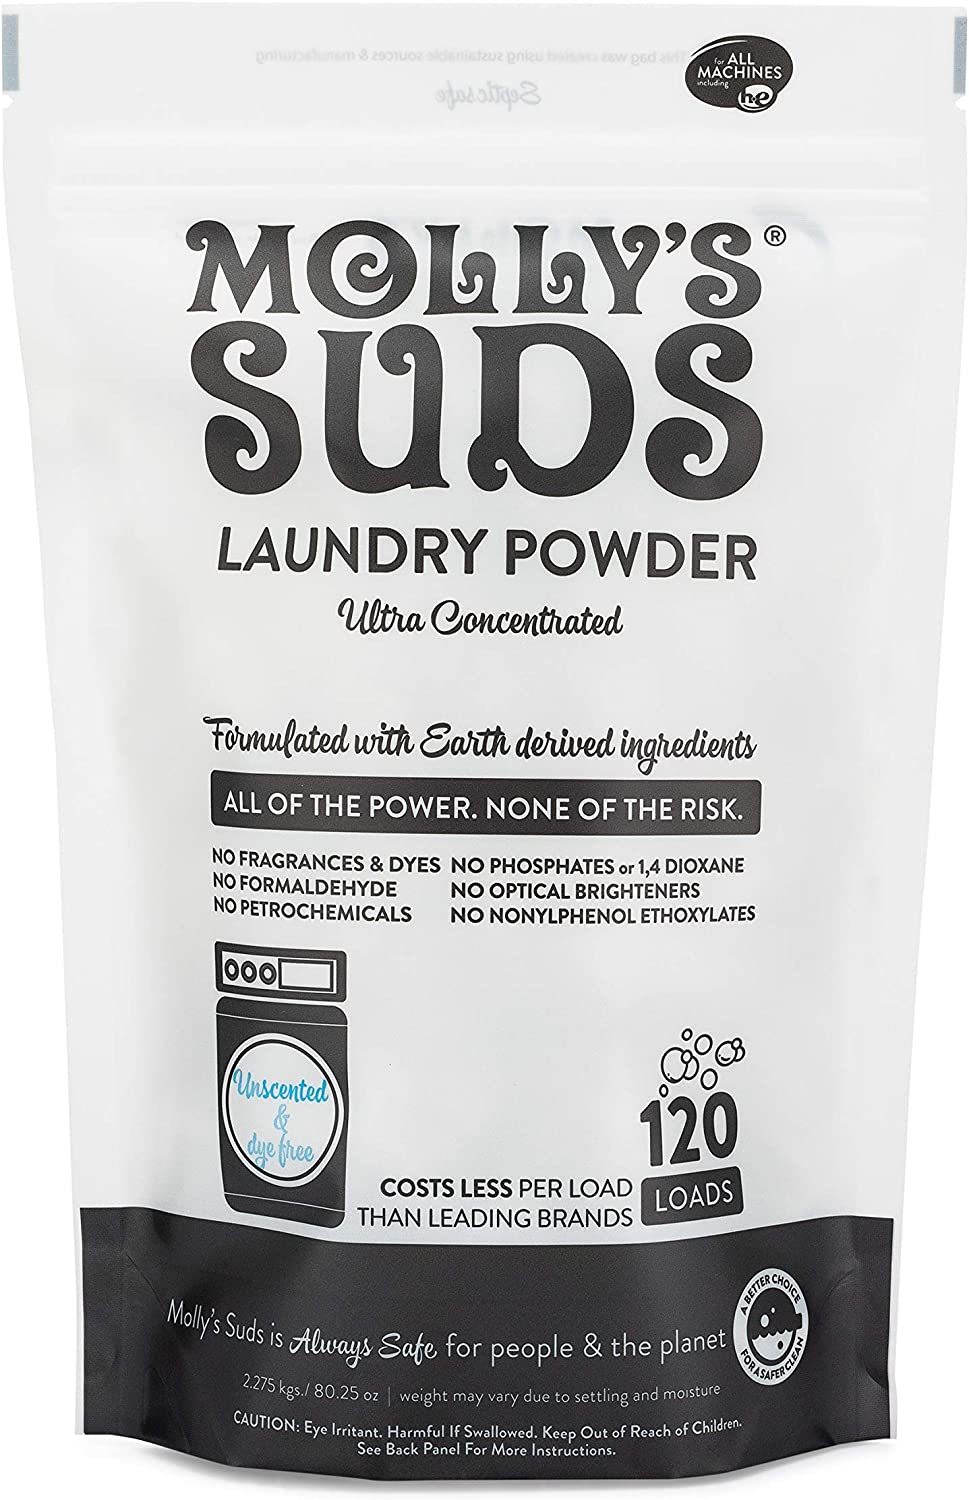 Mollys Suds Laundry Powder